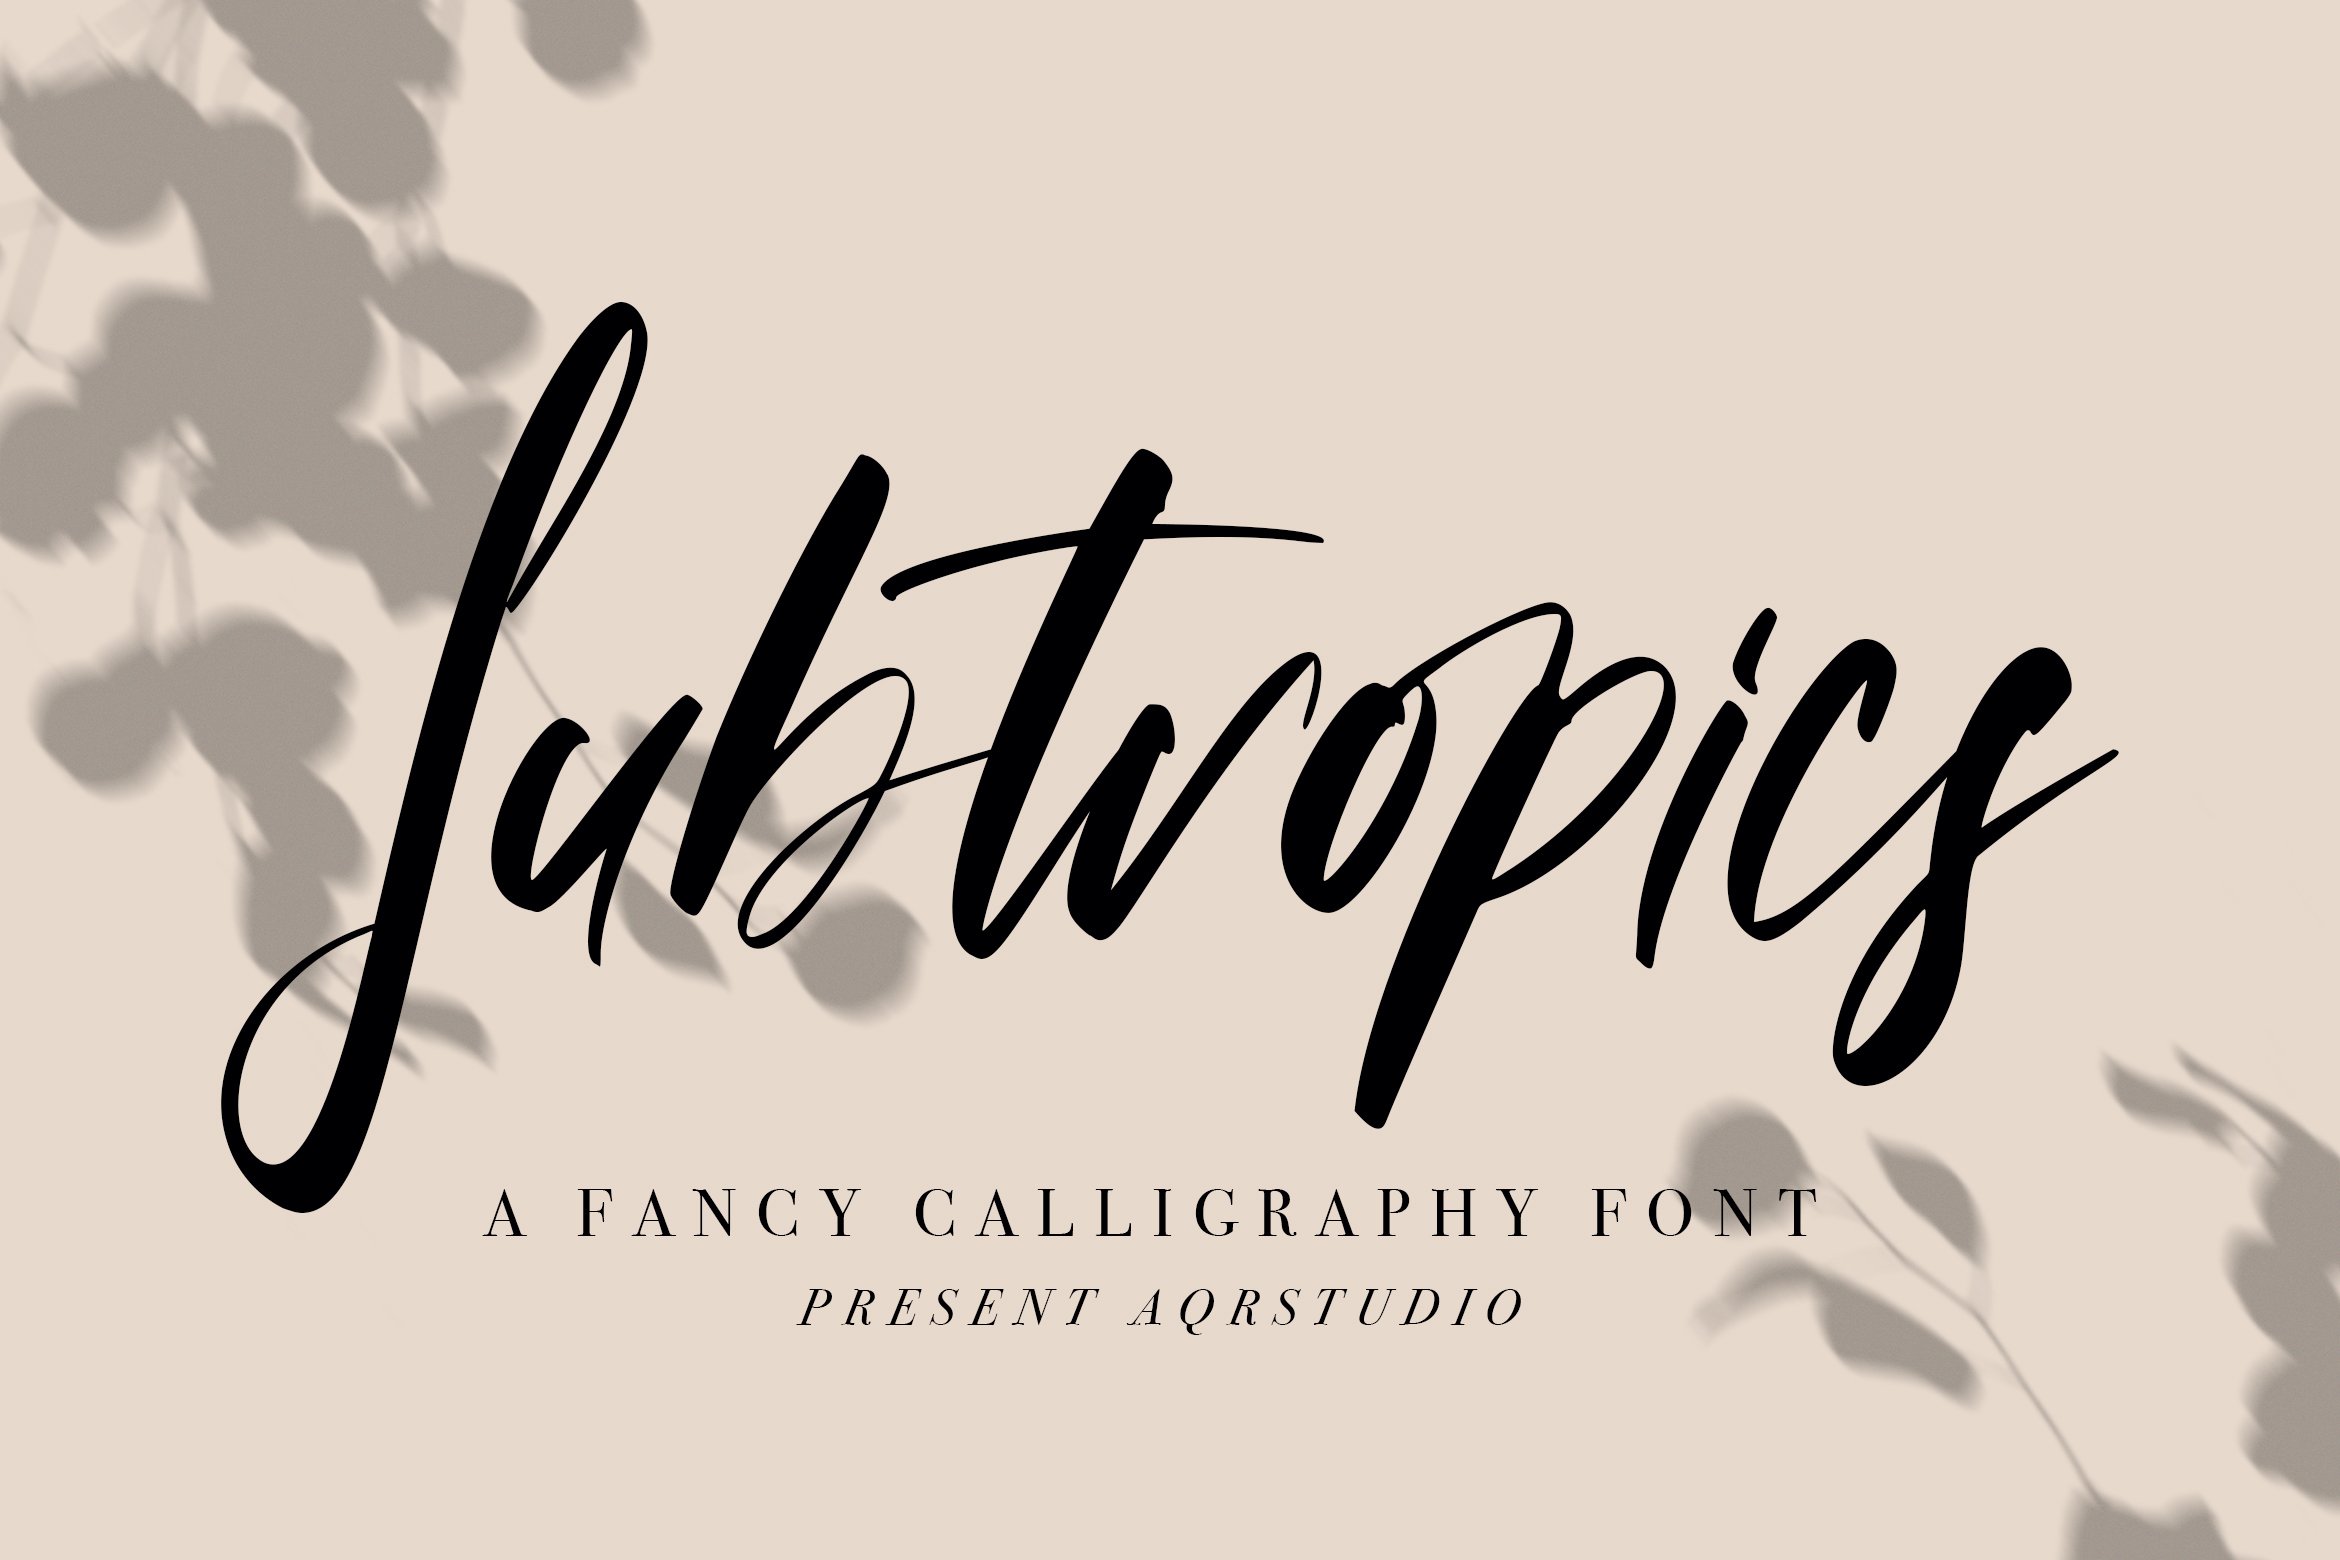 Subtropics - Fancy Calligraphy Font cover image.